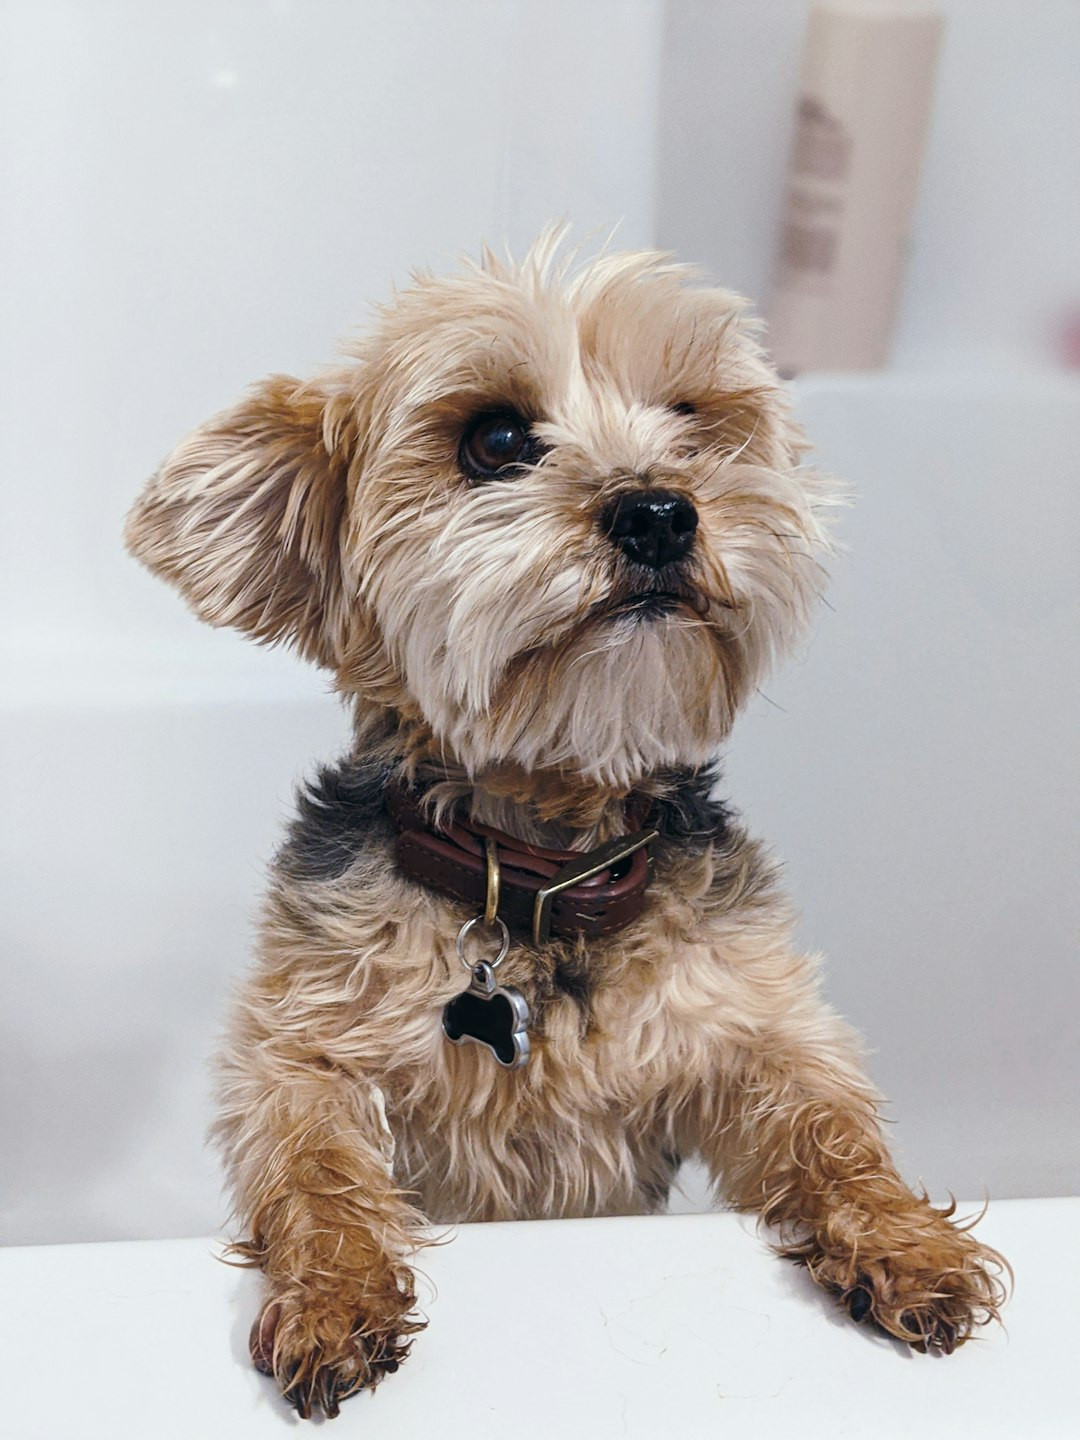 17. Bedlington Terrier – $4,000